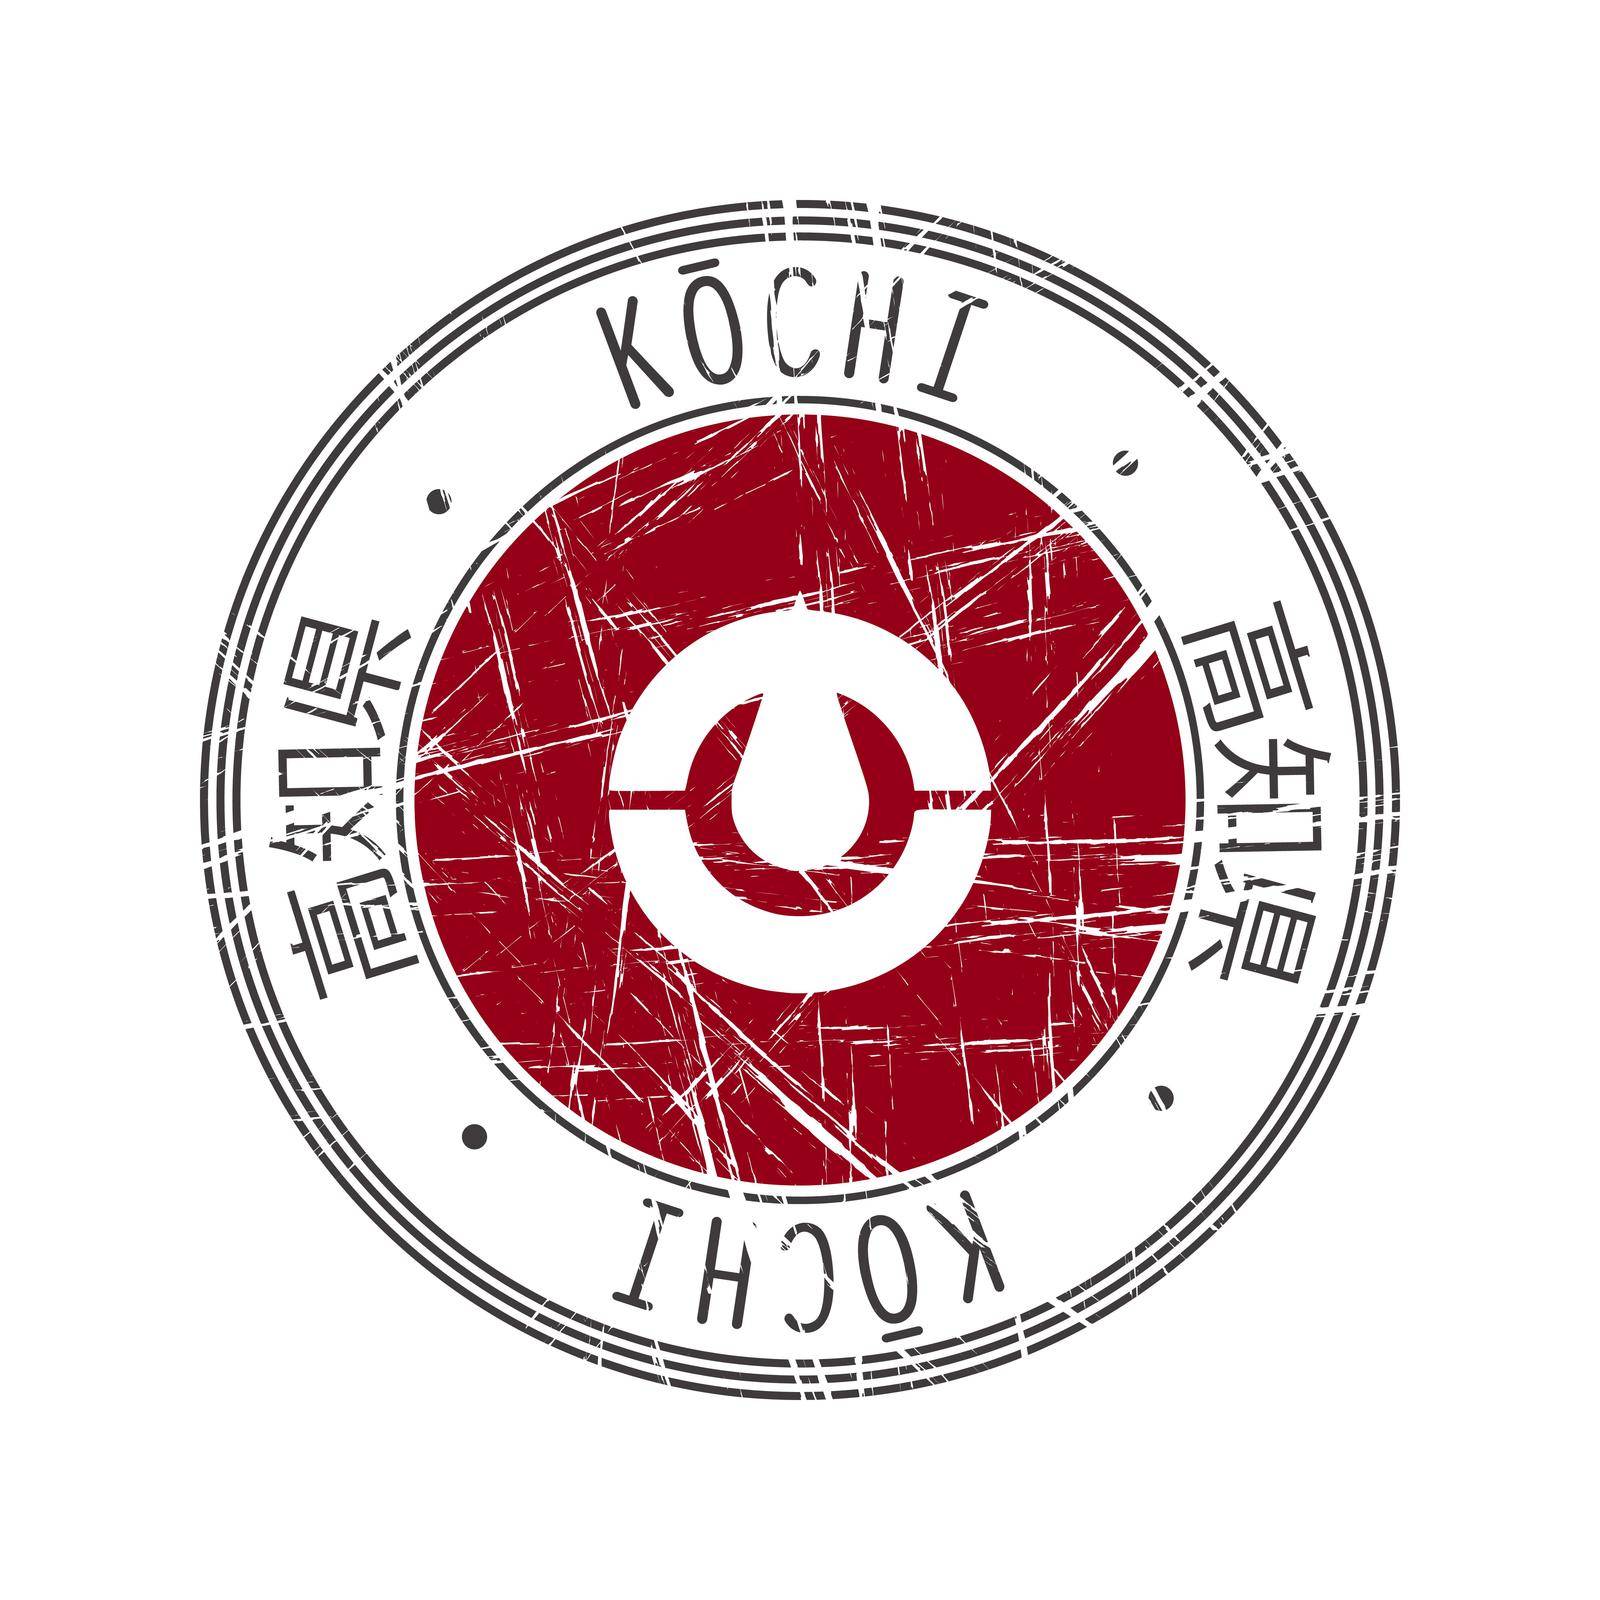 Kochi Prefecture rubber stamp by Lirch